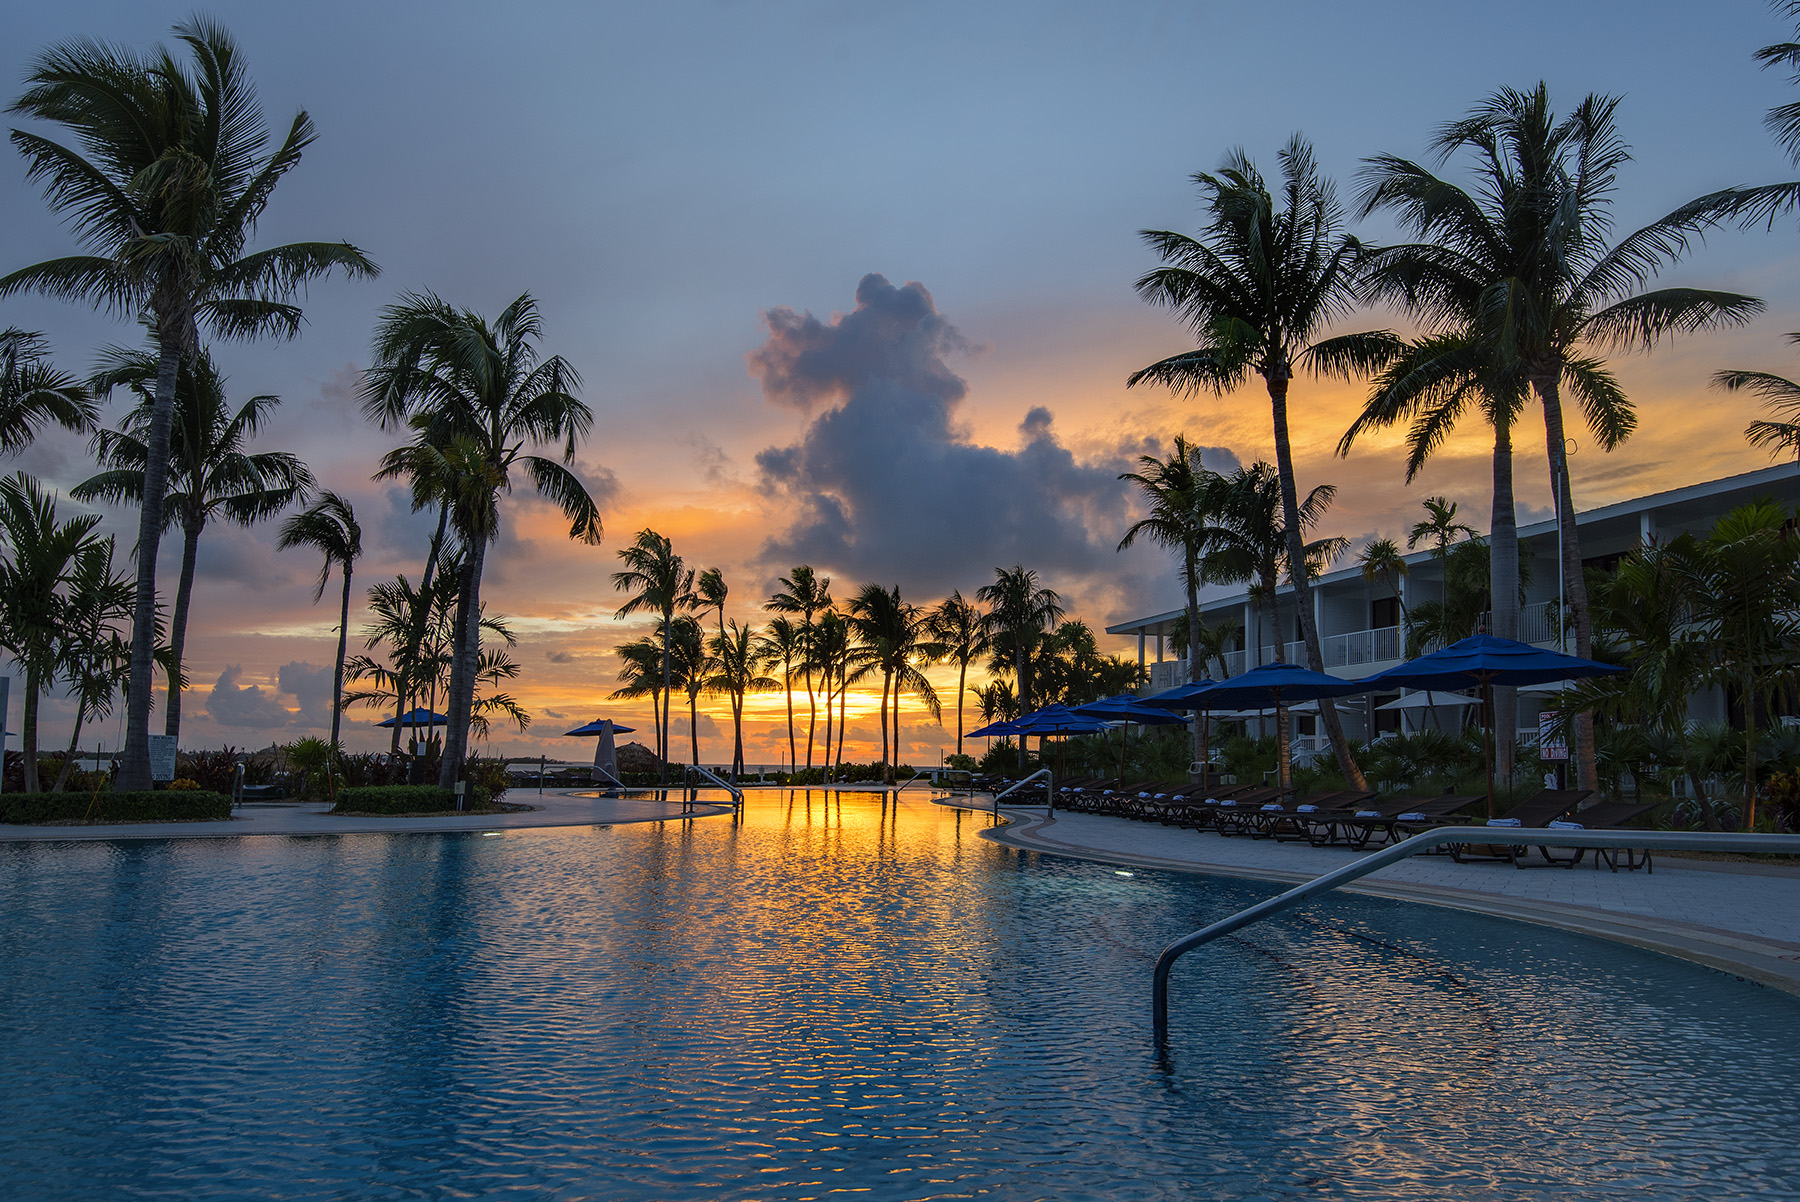 Hawks Cay Island Resort, Key West, FL : Five Star Alliance